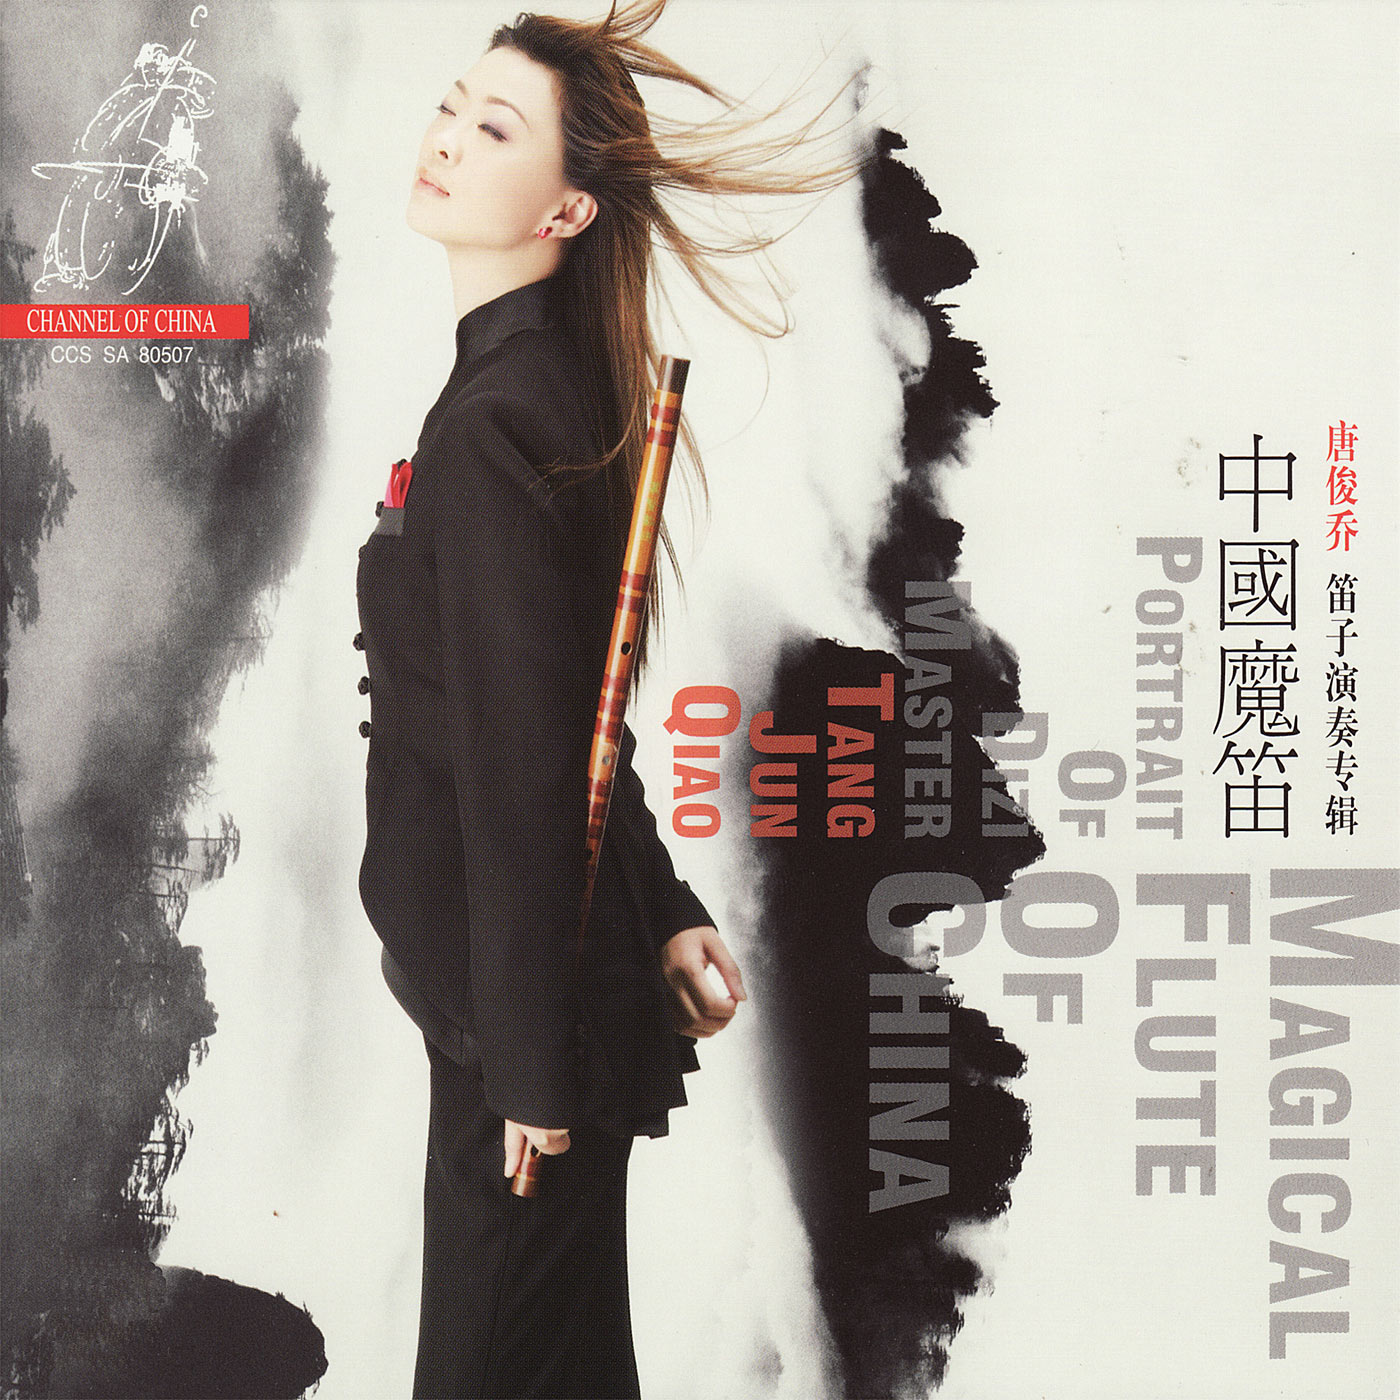 Tang Jun Qiao – Magical Flute of China